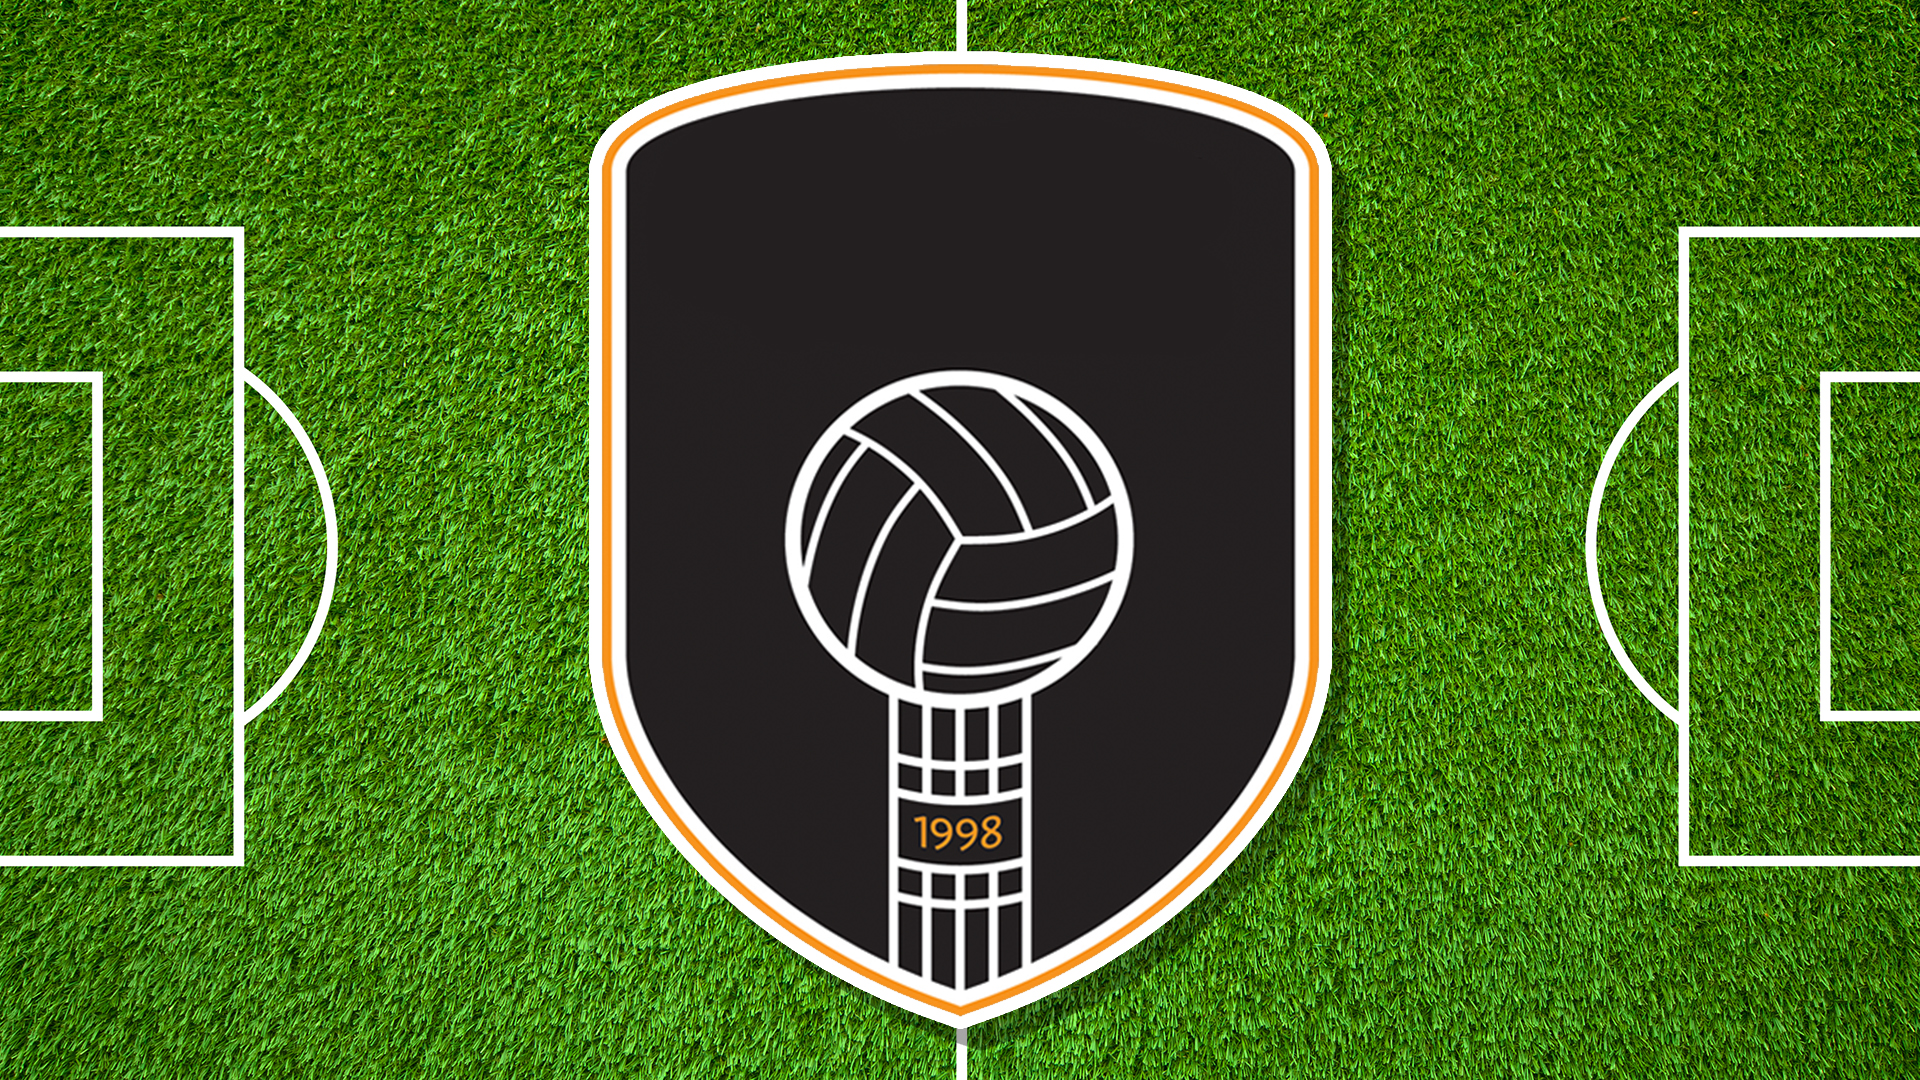 A football badge